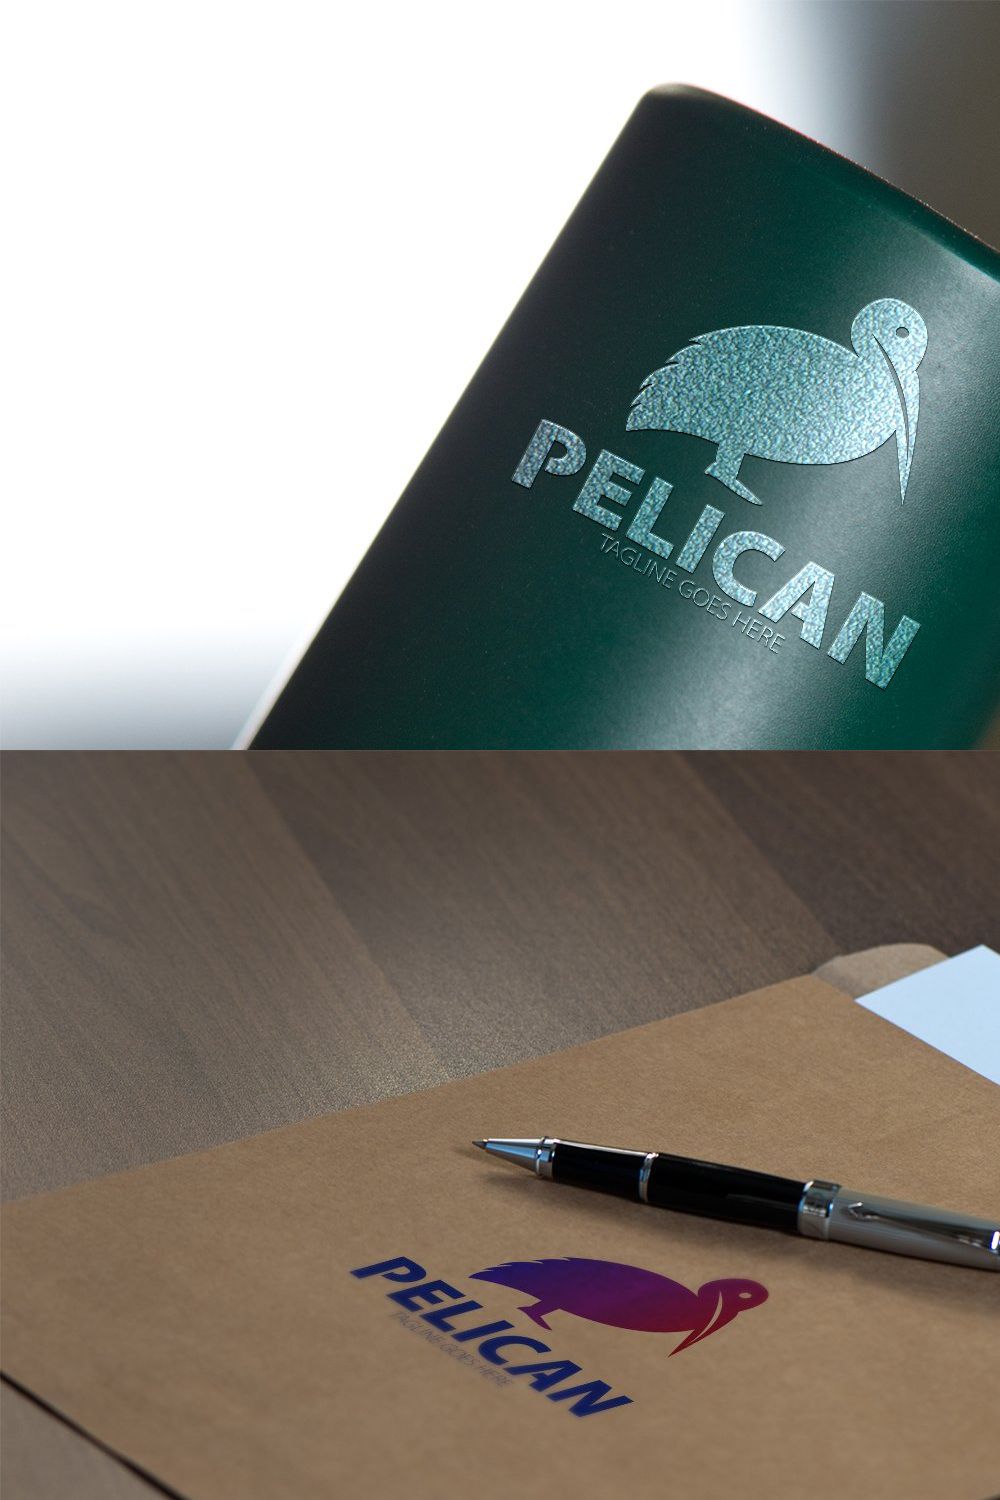 Pelican pinterest preview image.